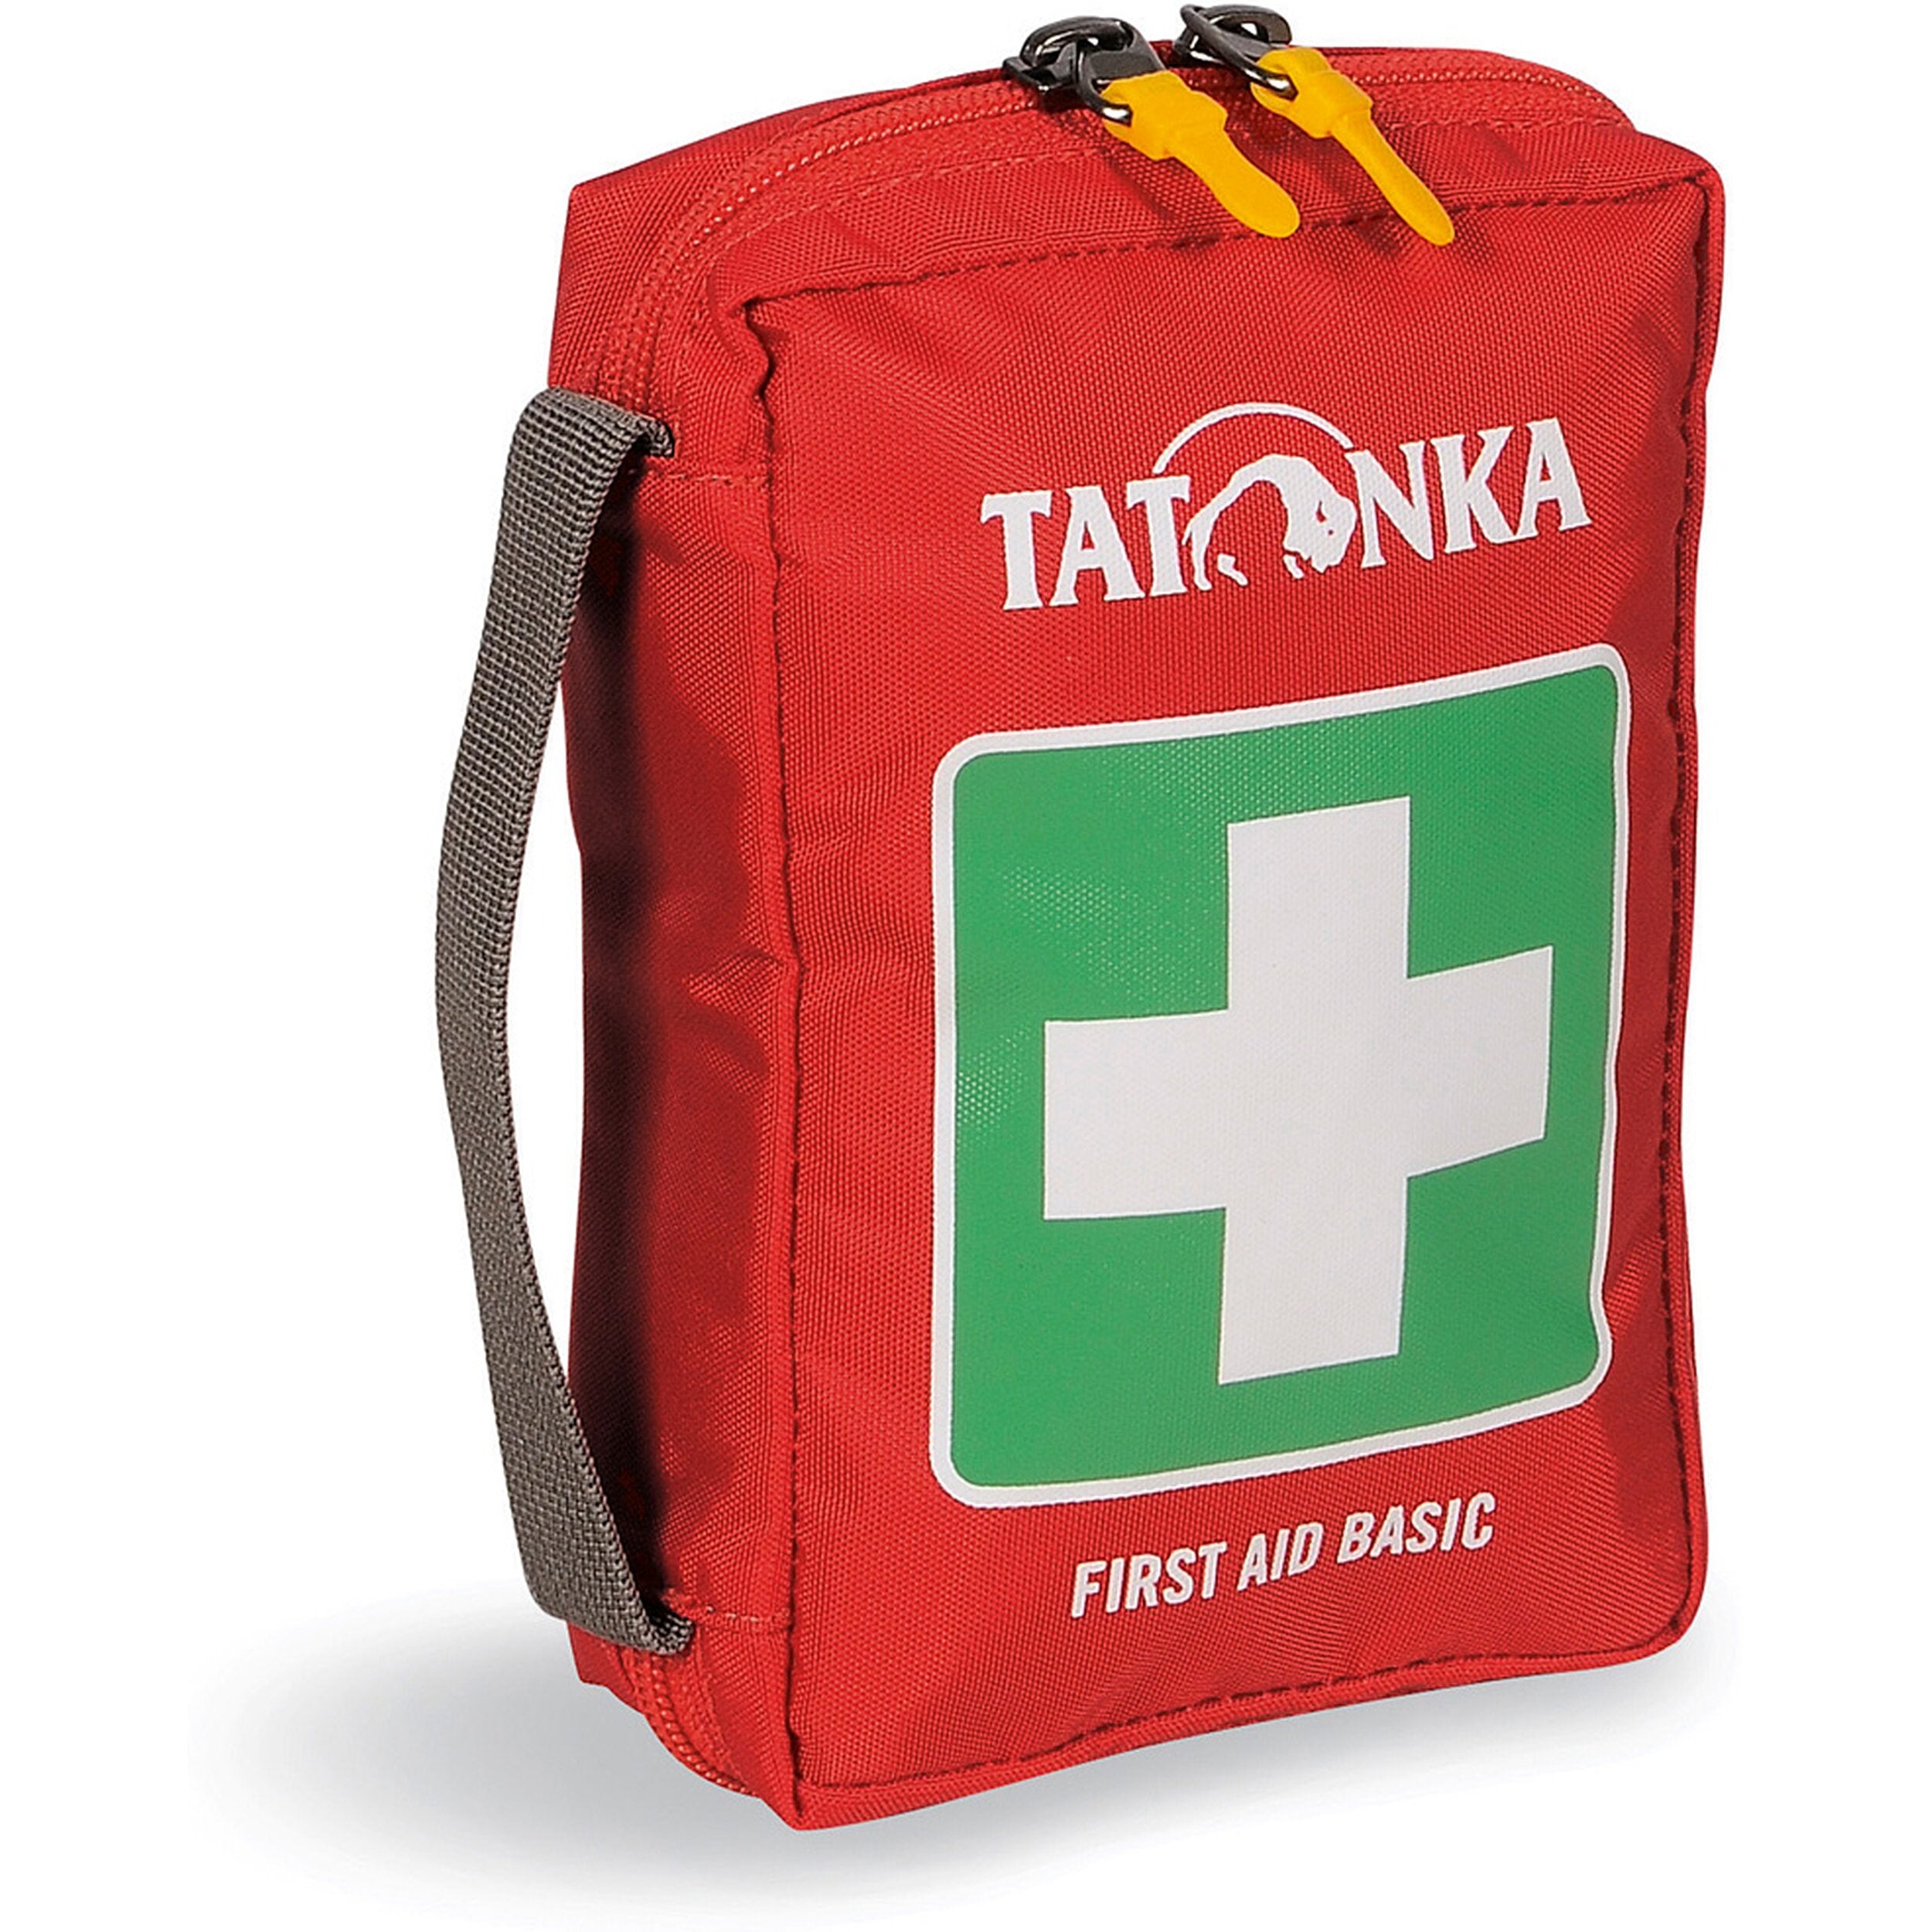 Erste Hilfe First Aid Basic